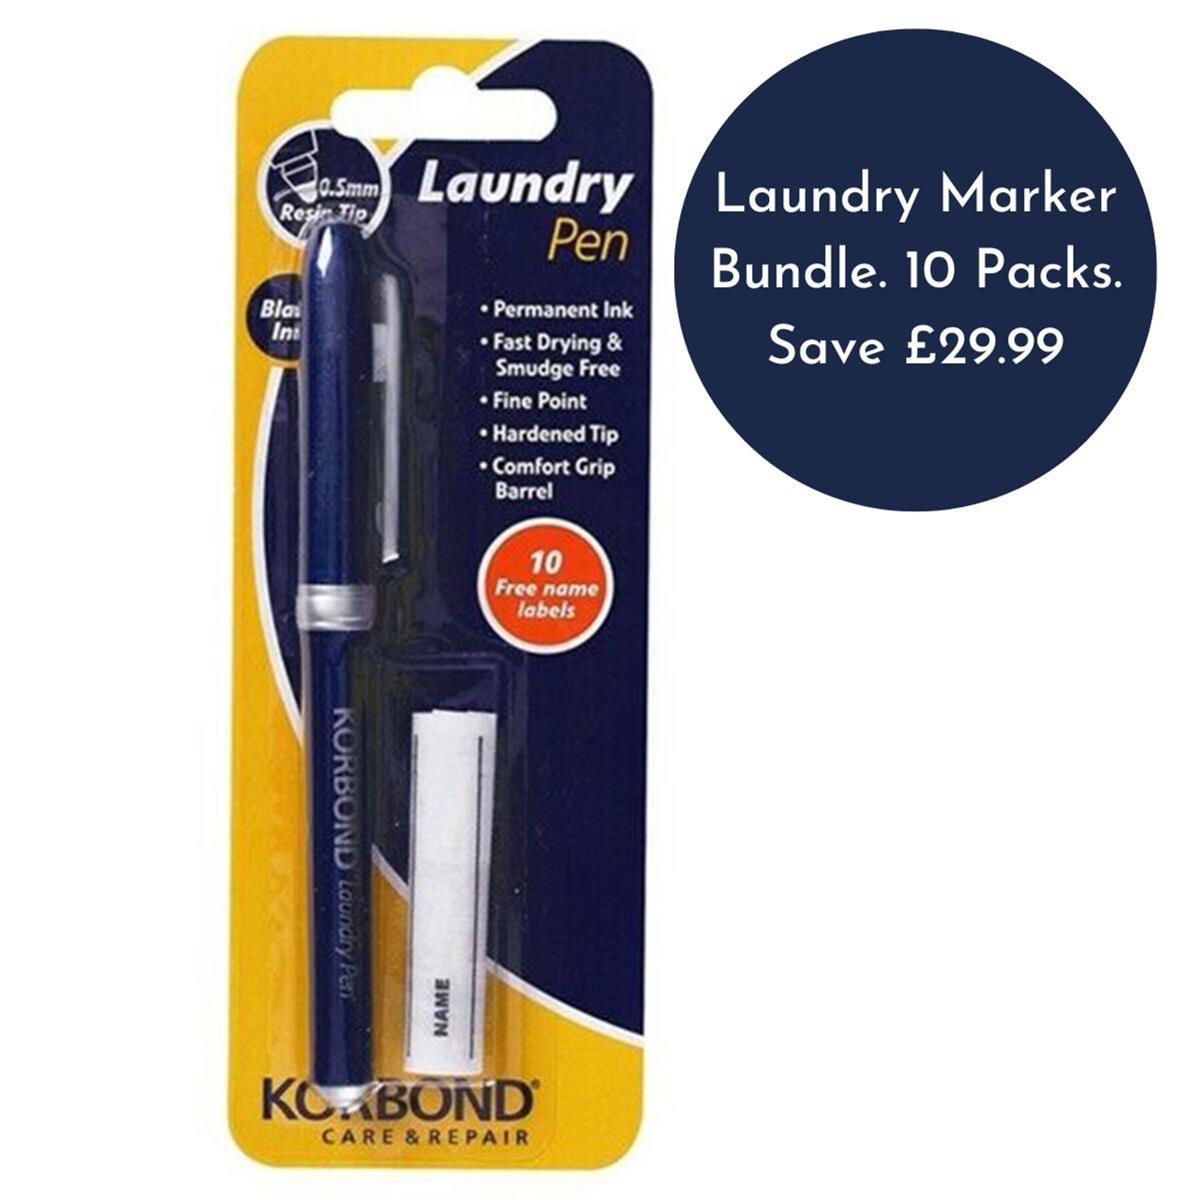 Laundry Marker Bundle. 10 Packs. Save £29.99